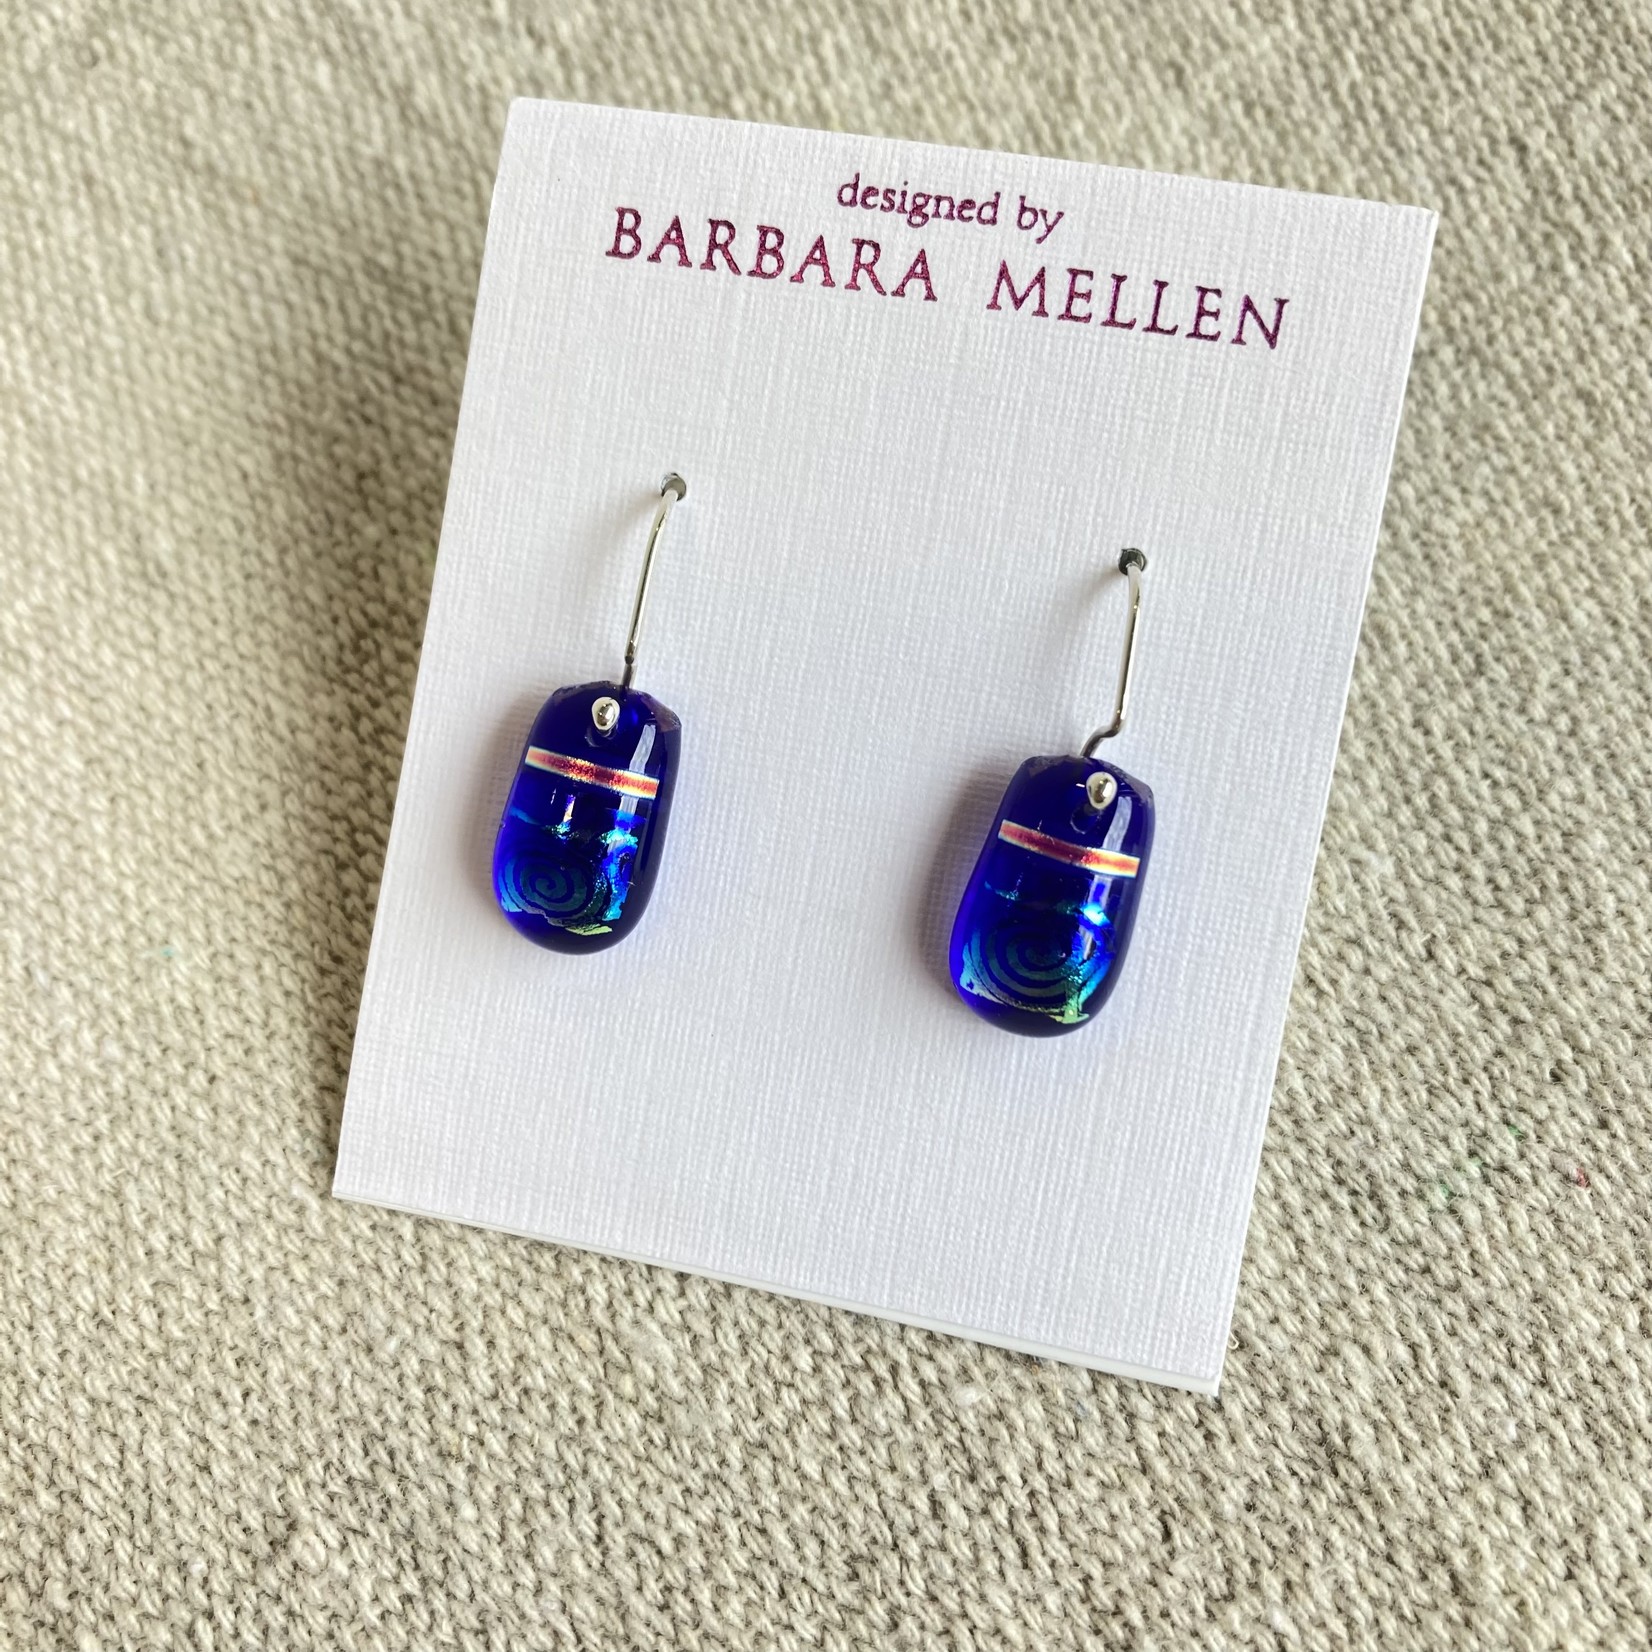 Barbara Mellen Small Earring 1 (online)